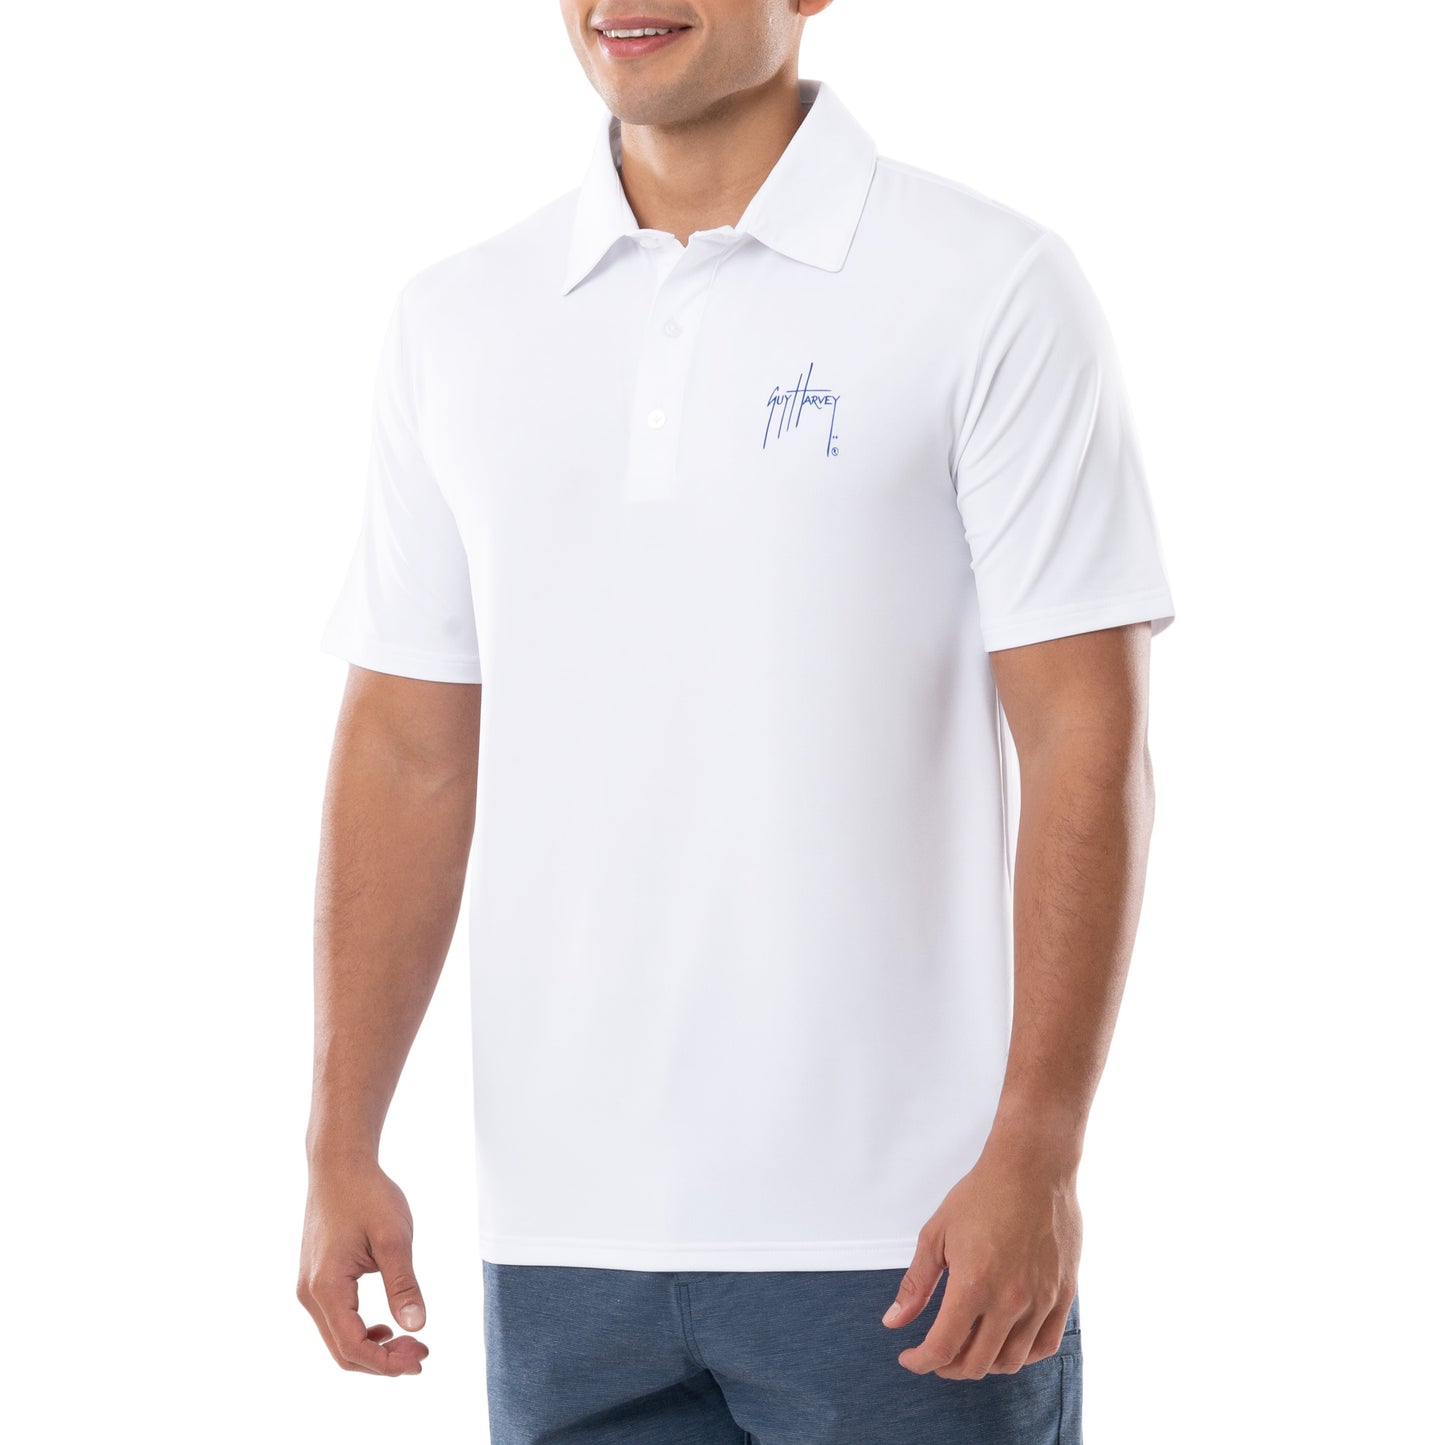 Men's Short Sleeve Performance Polo Shirt View 24